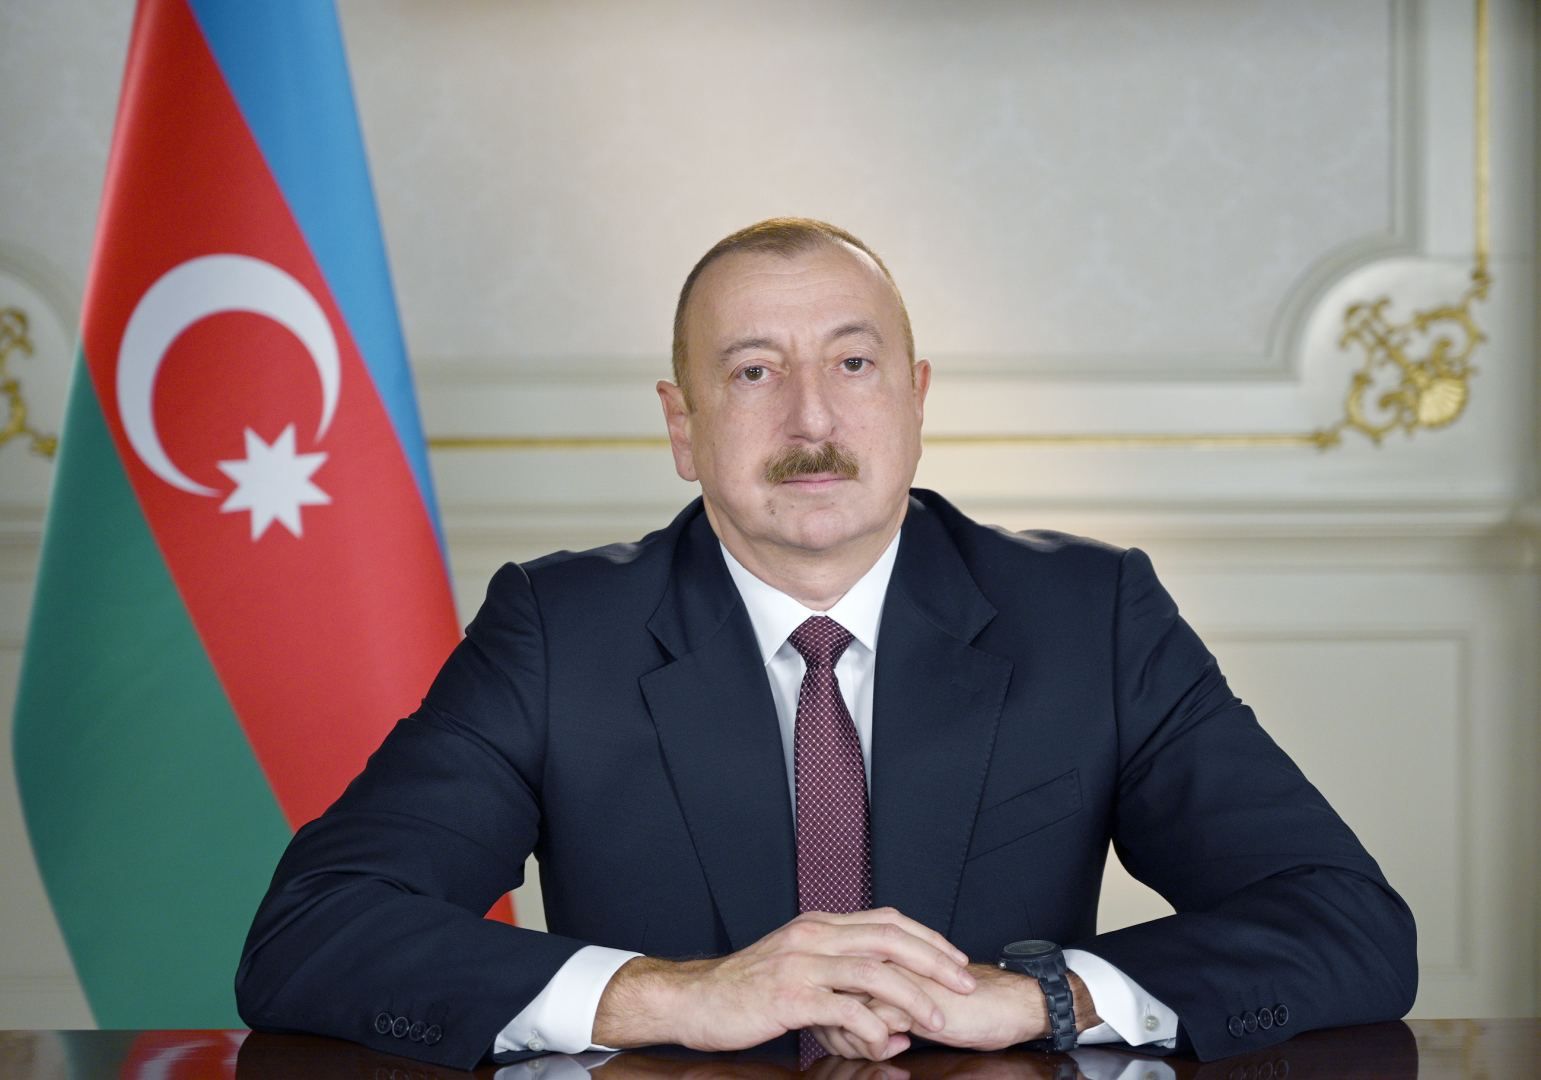 President Ilham Aliyev congratulates Võ Văn Thưởng on his election as President of Vietnam